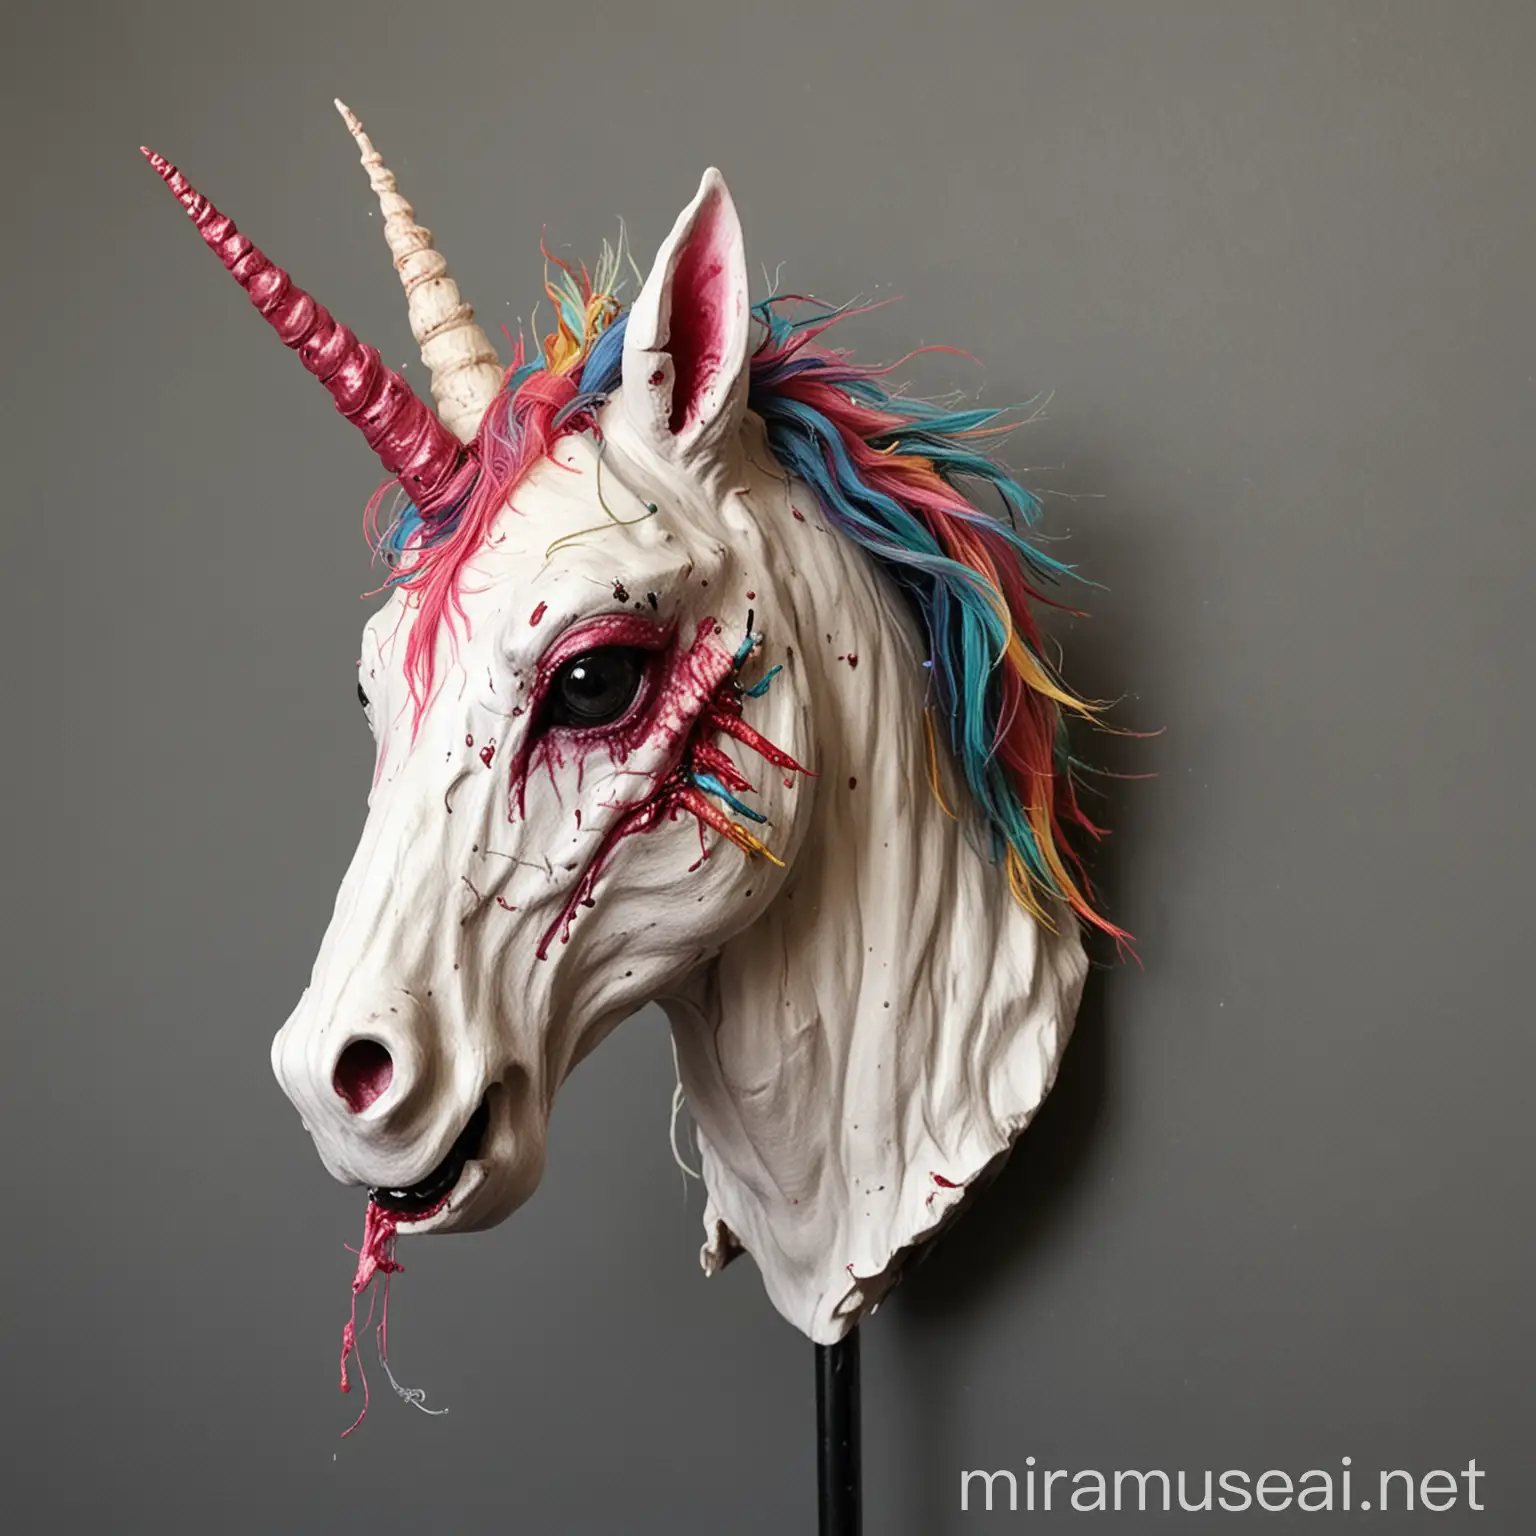 Eerie Severed Unicorn Head Dark Fantasy Artwork Depicting Macabre Beauty